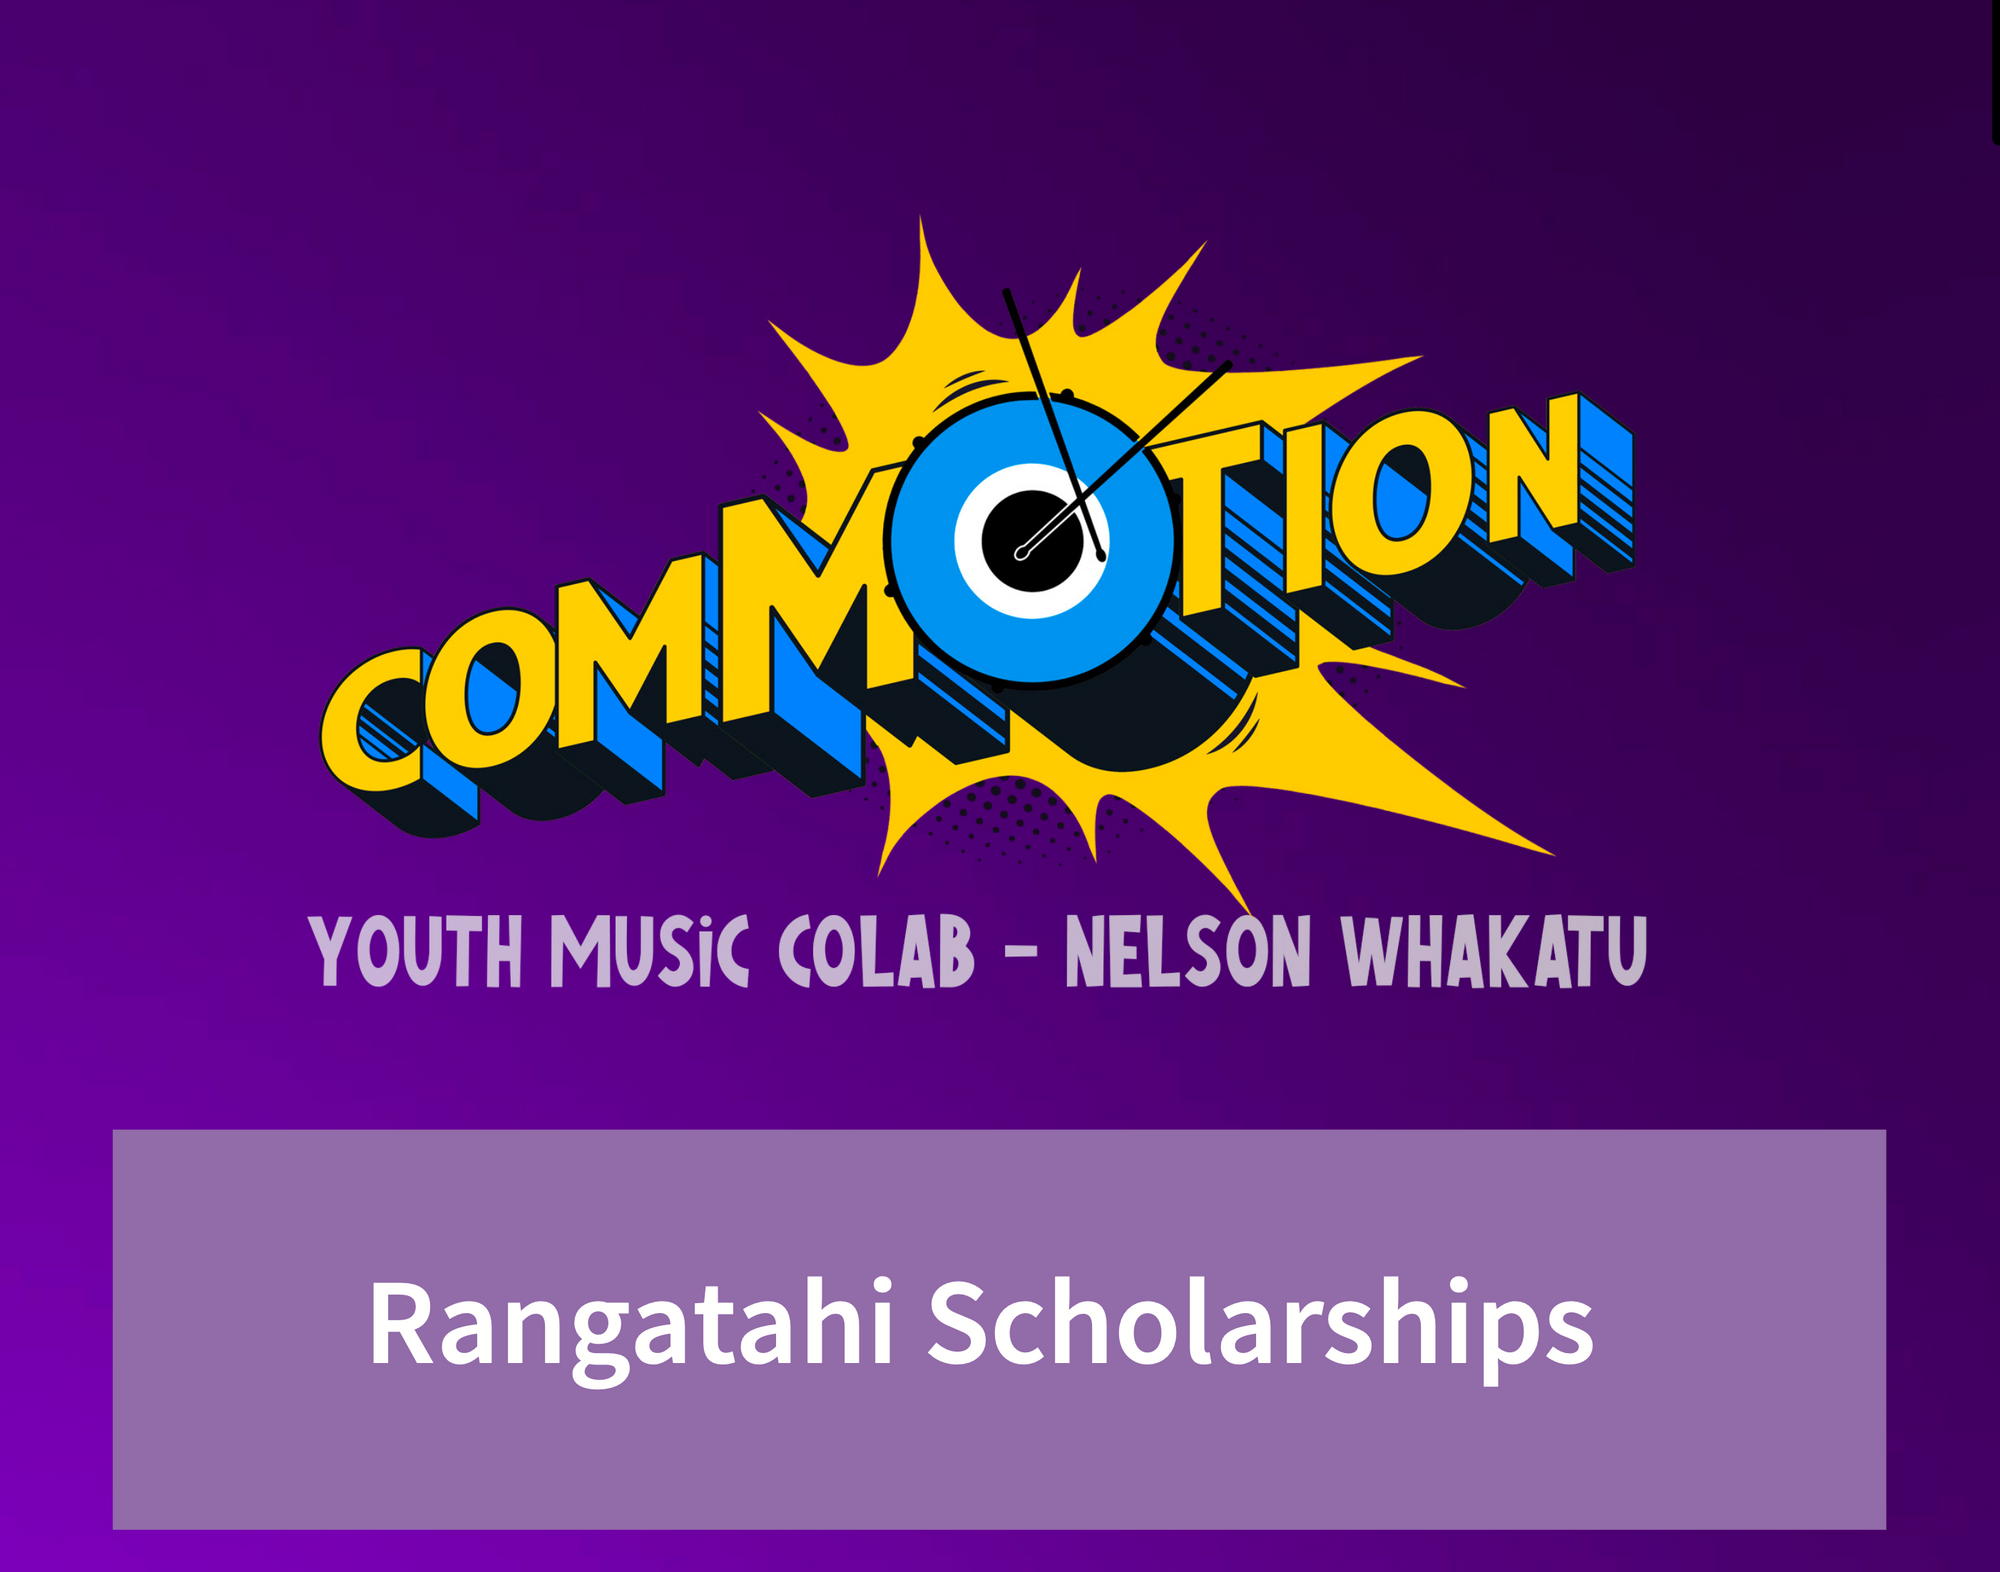 Scholarships available for rangatahi musicians, artists